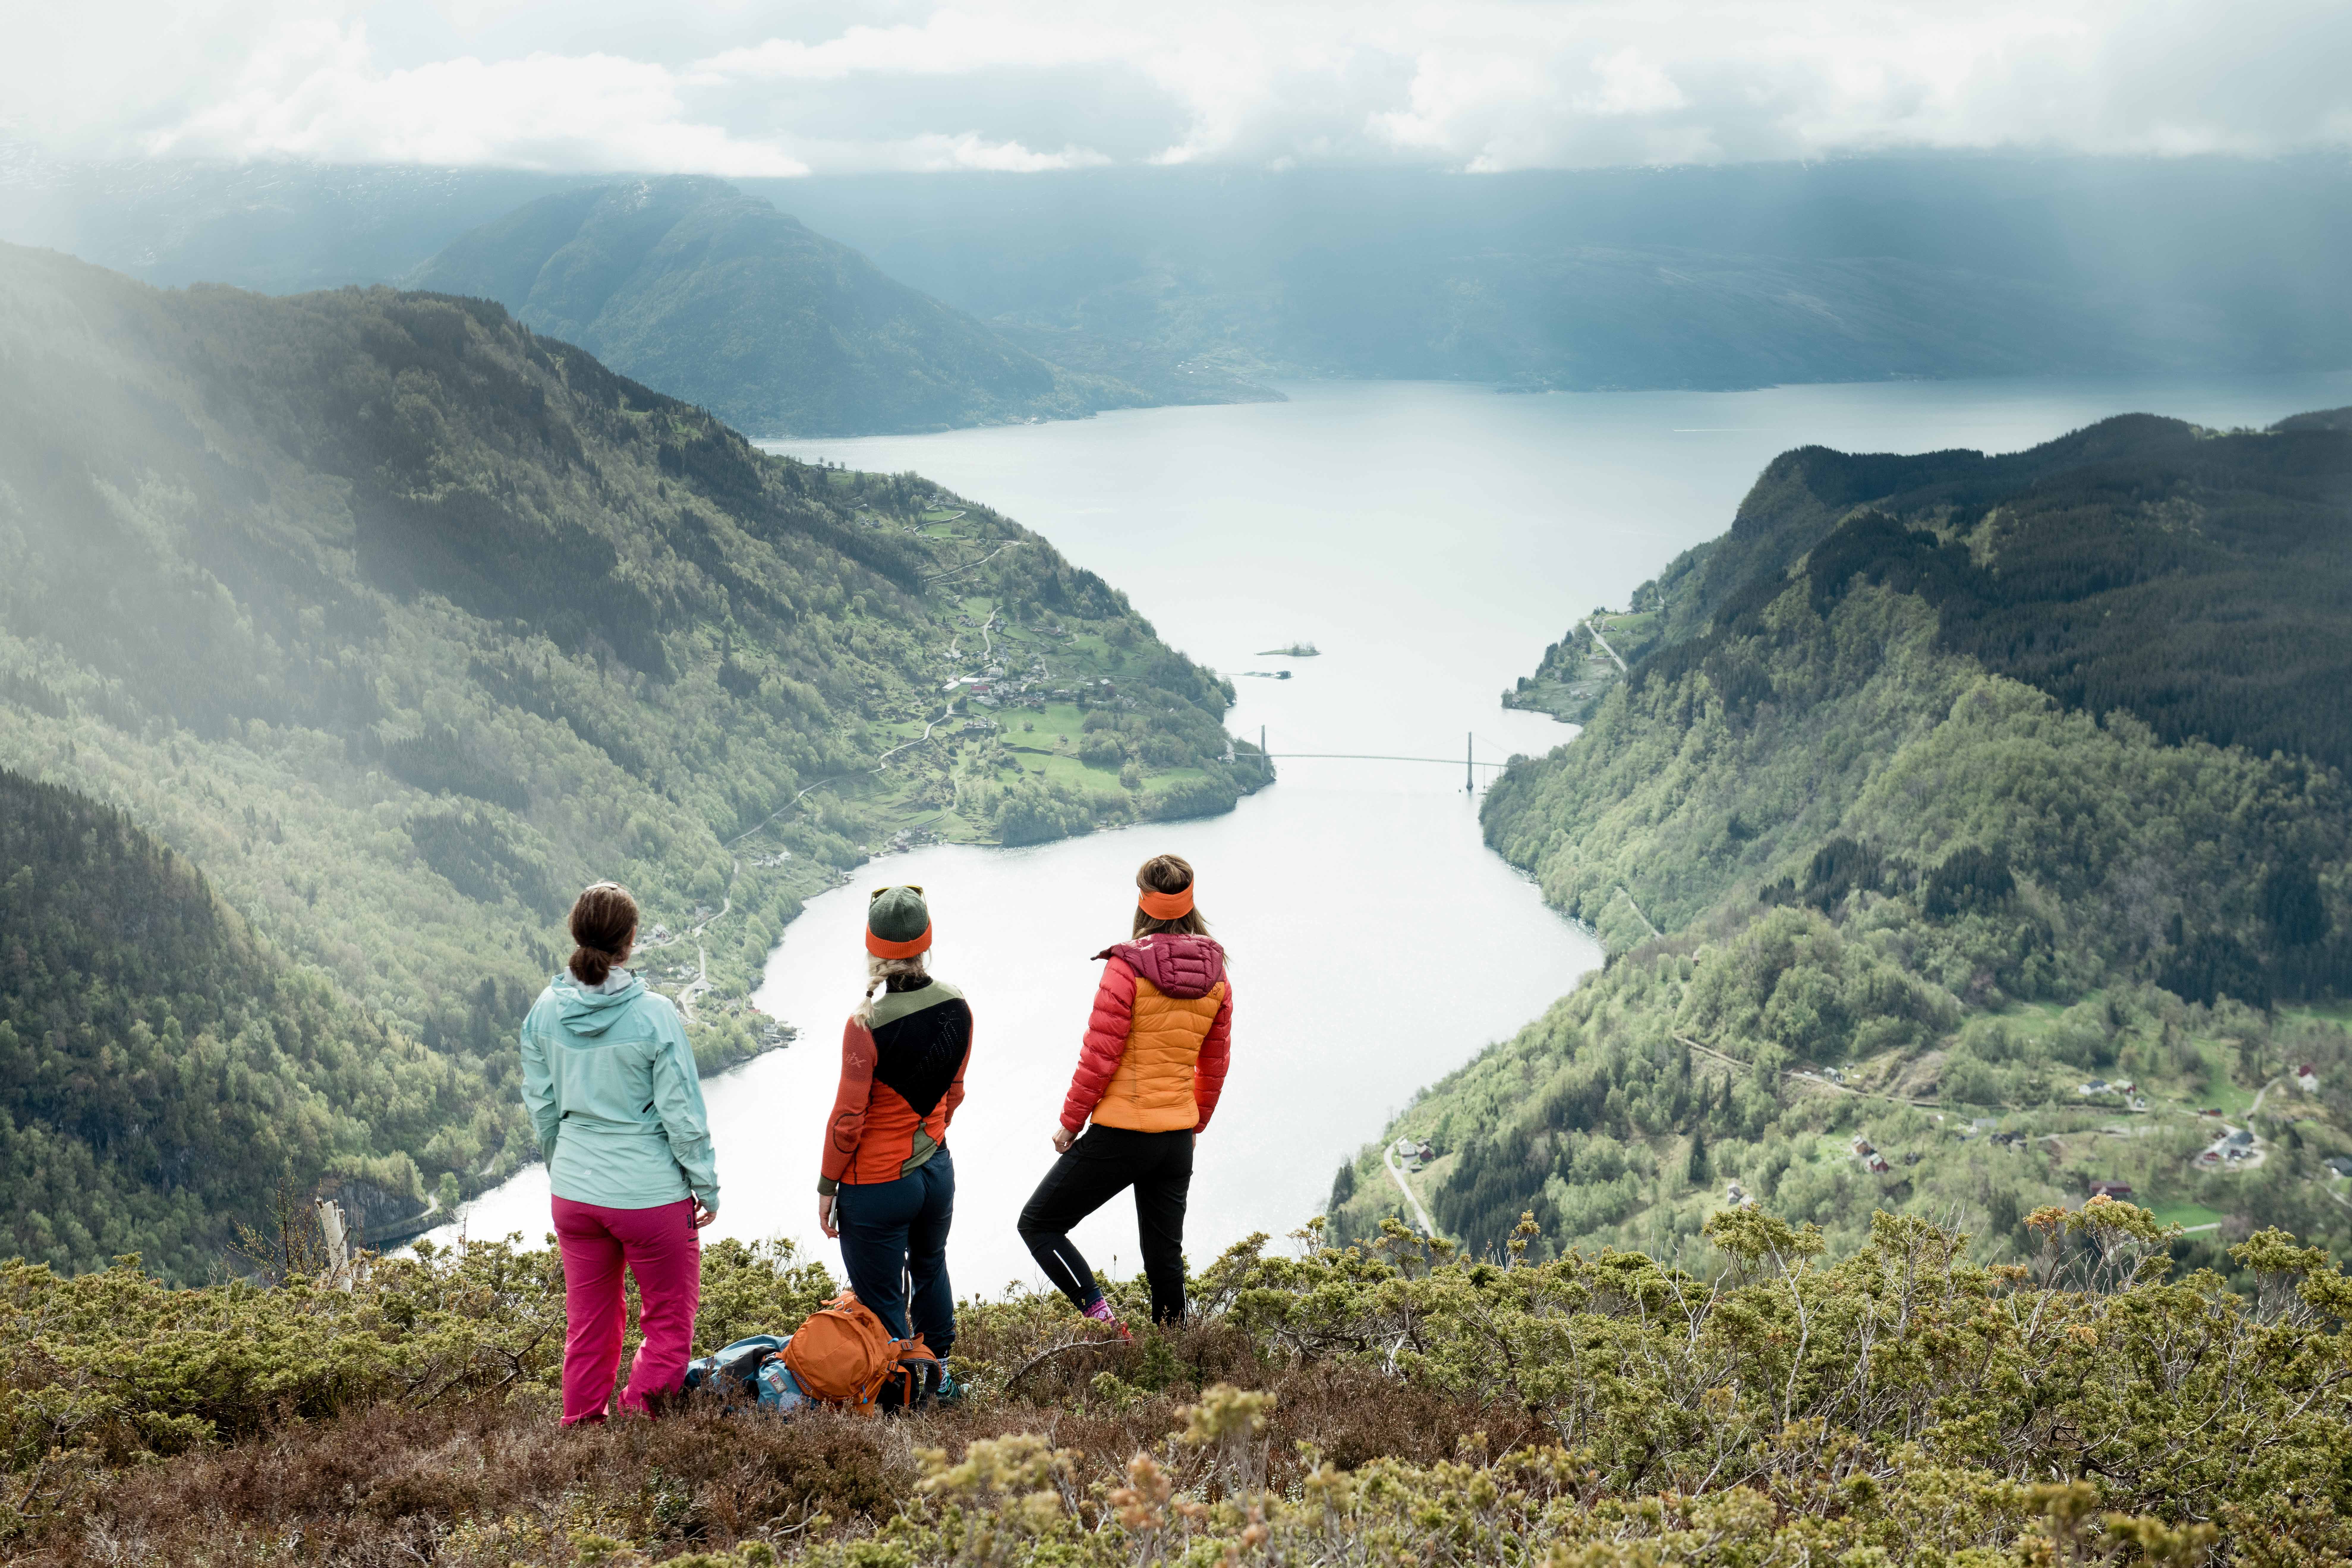 Guida turar til fots  – Hardangerfjord Adventure